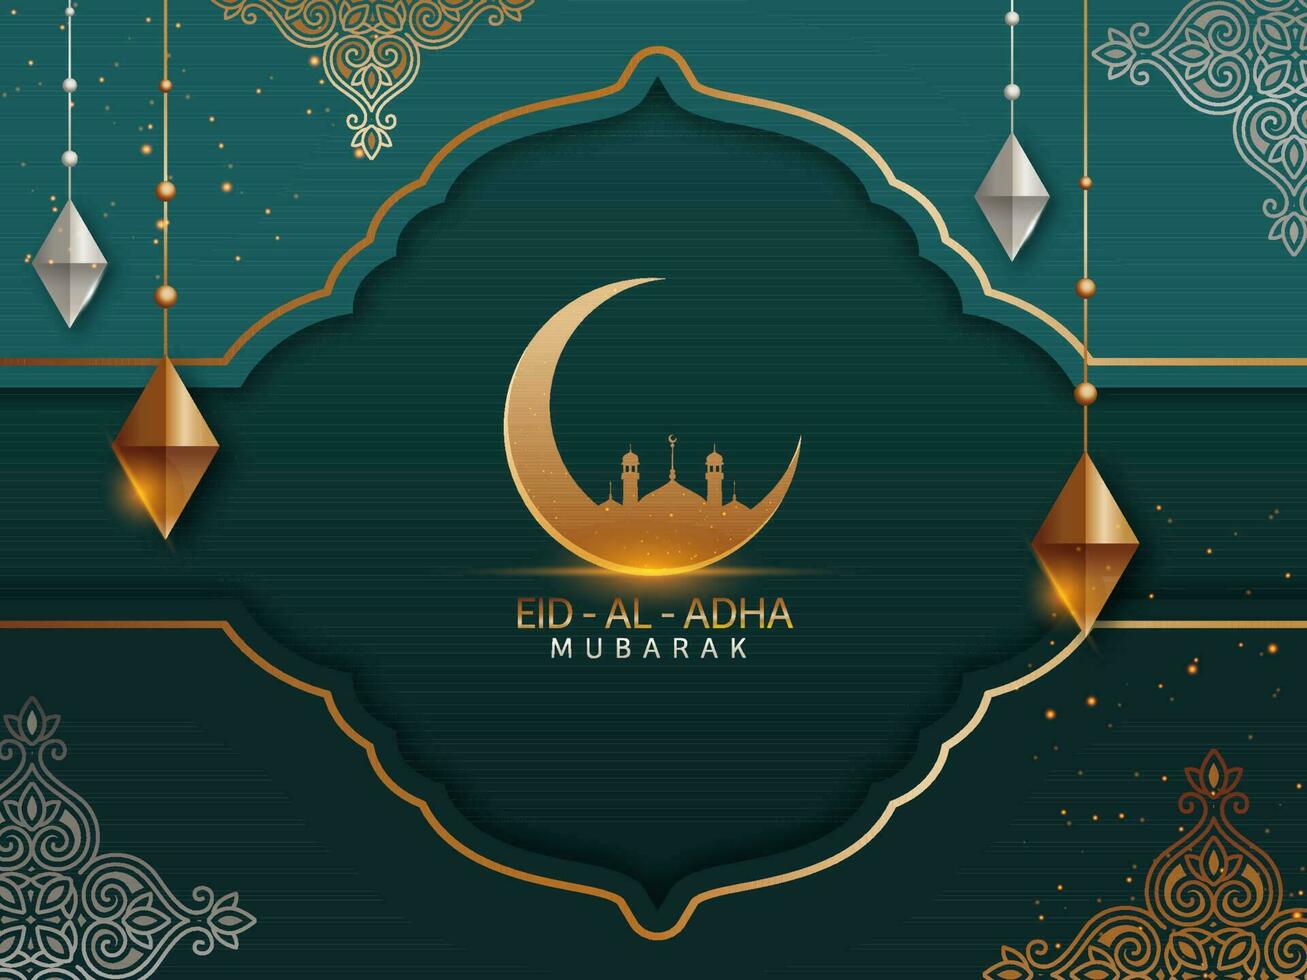 Eid-Al-Adha Mubarak Concept With Golden Crescent Moon, Mosque And 3D Rhombus Shape Hang On Teal Background. vector